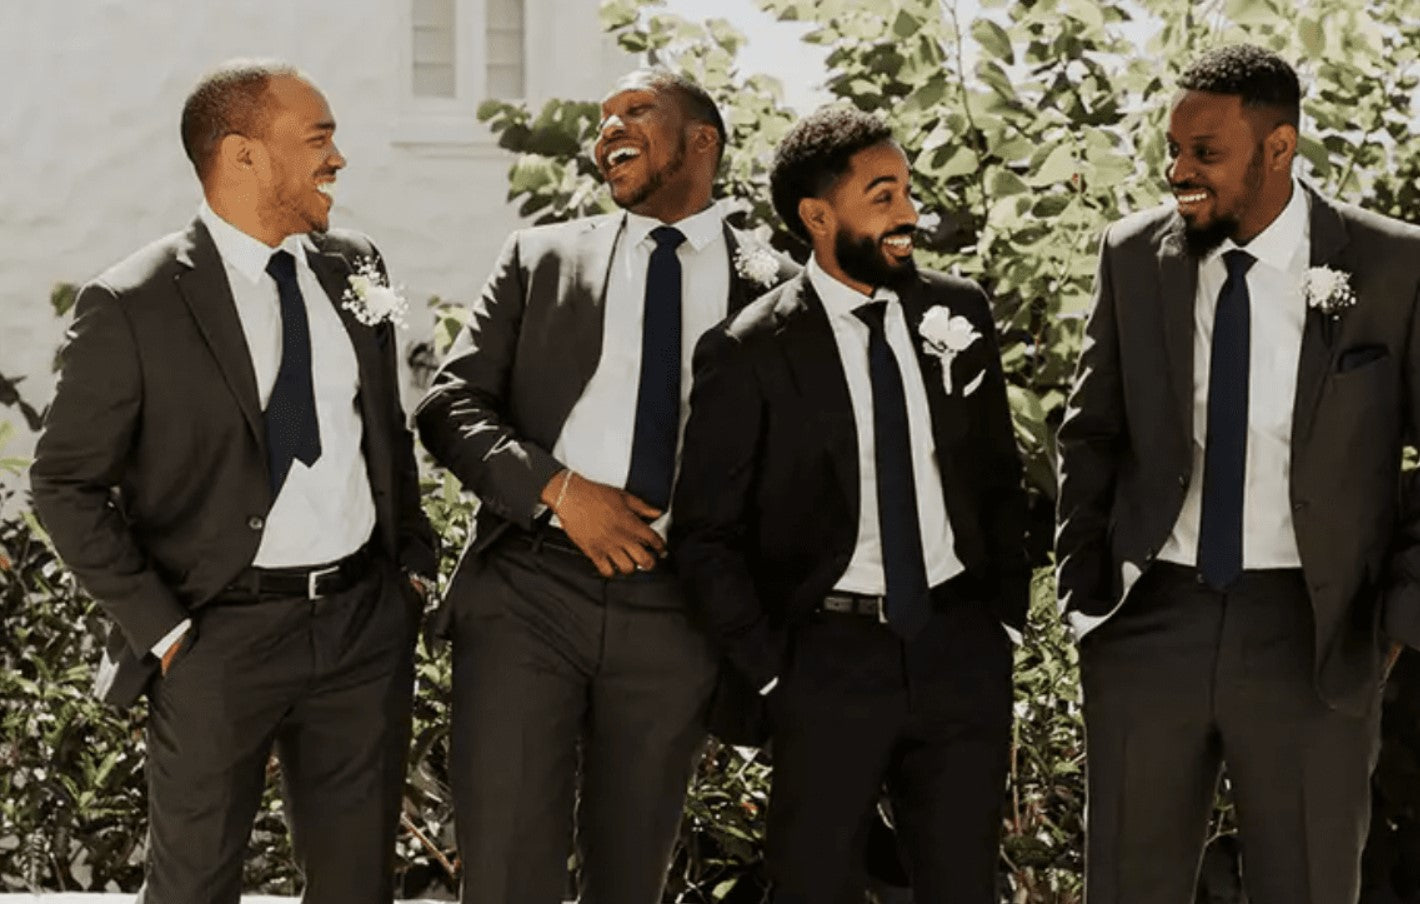 Wedding Attire & Suits For Men